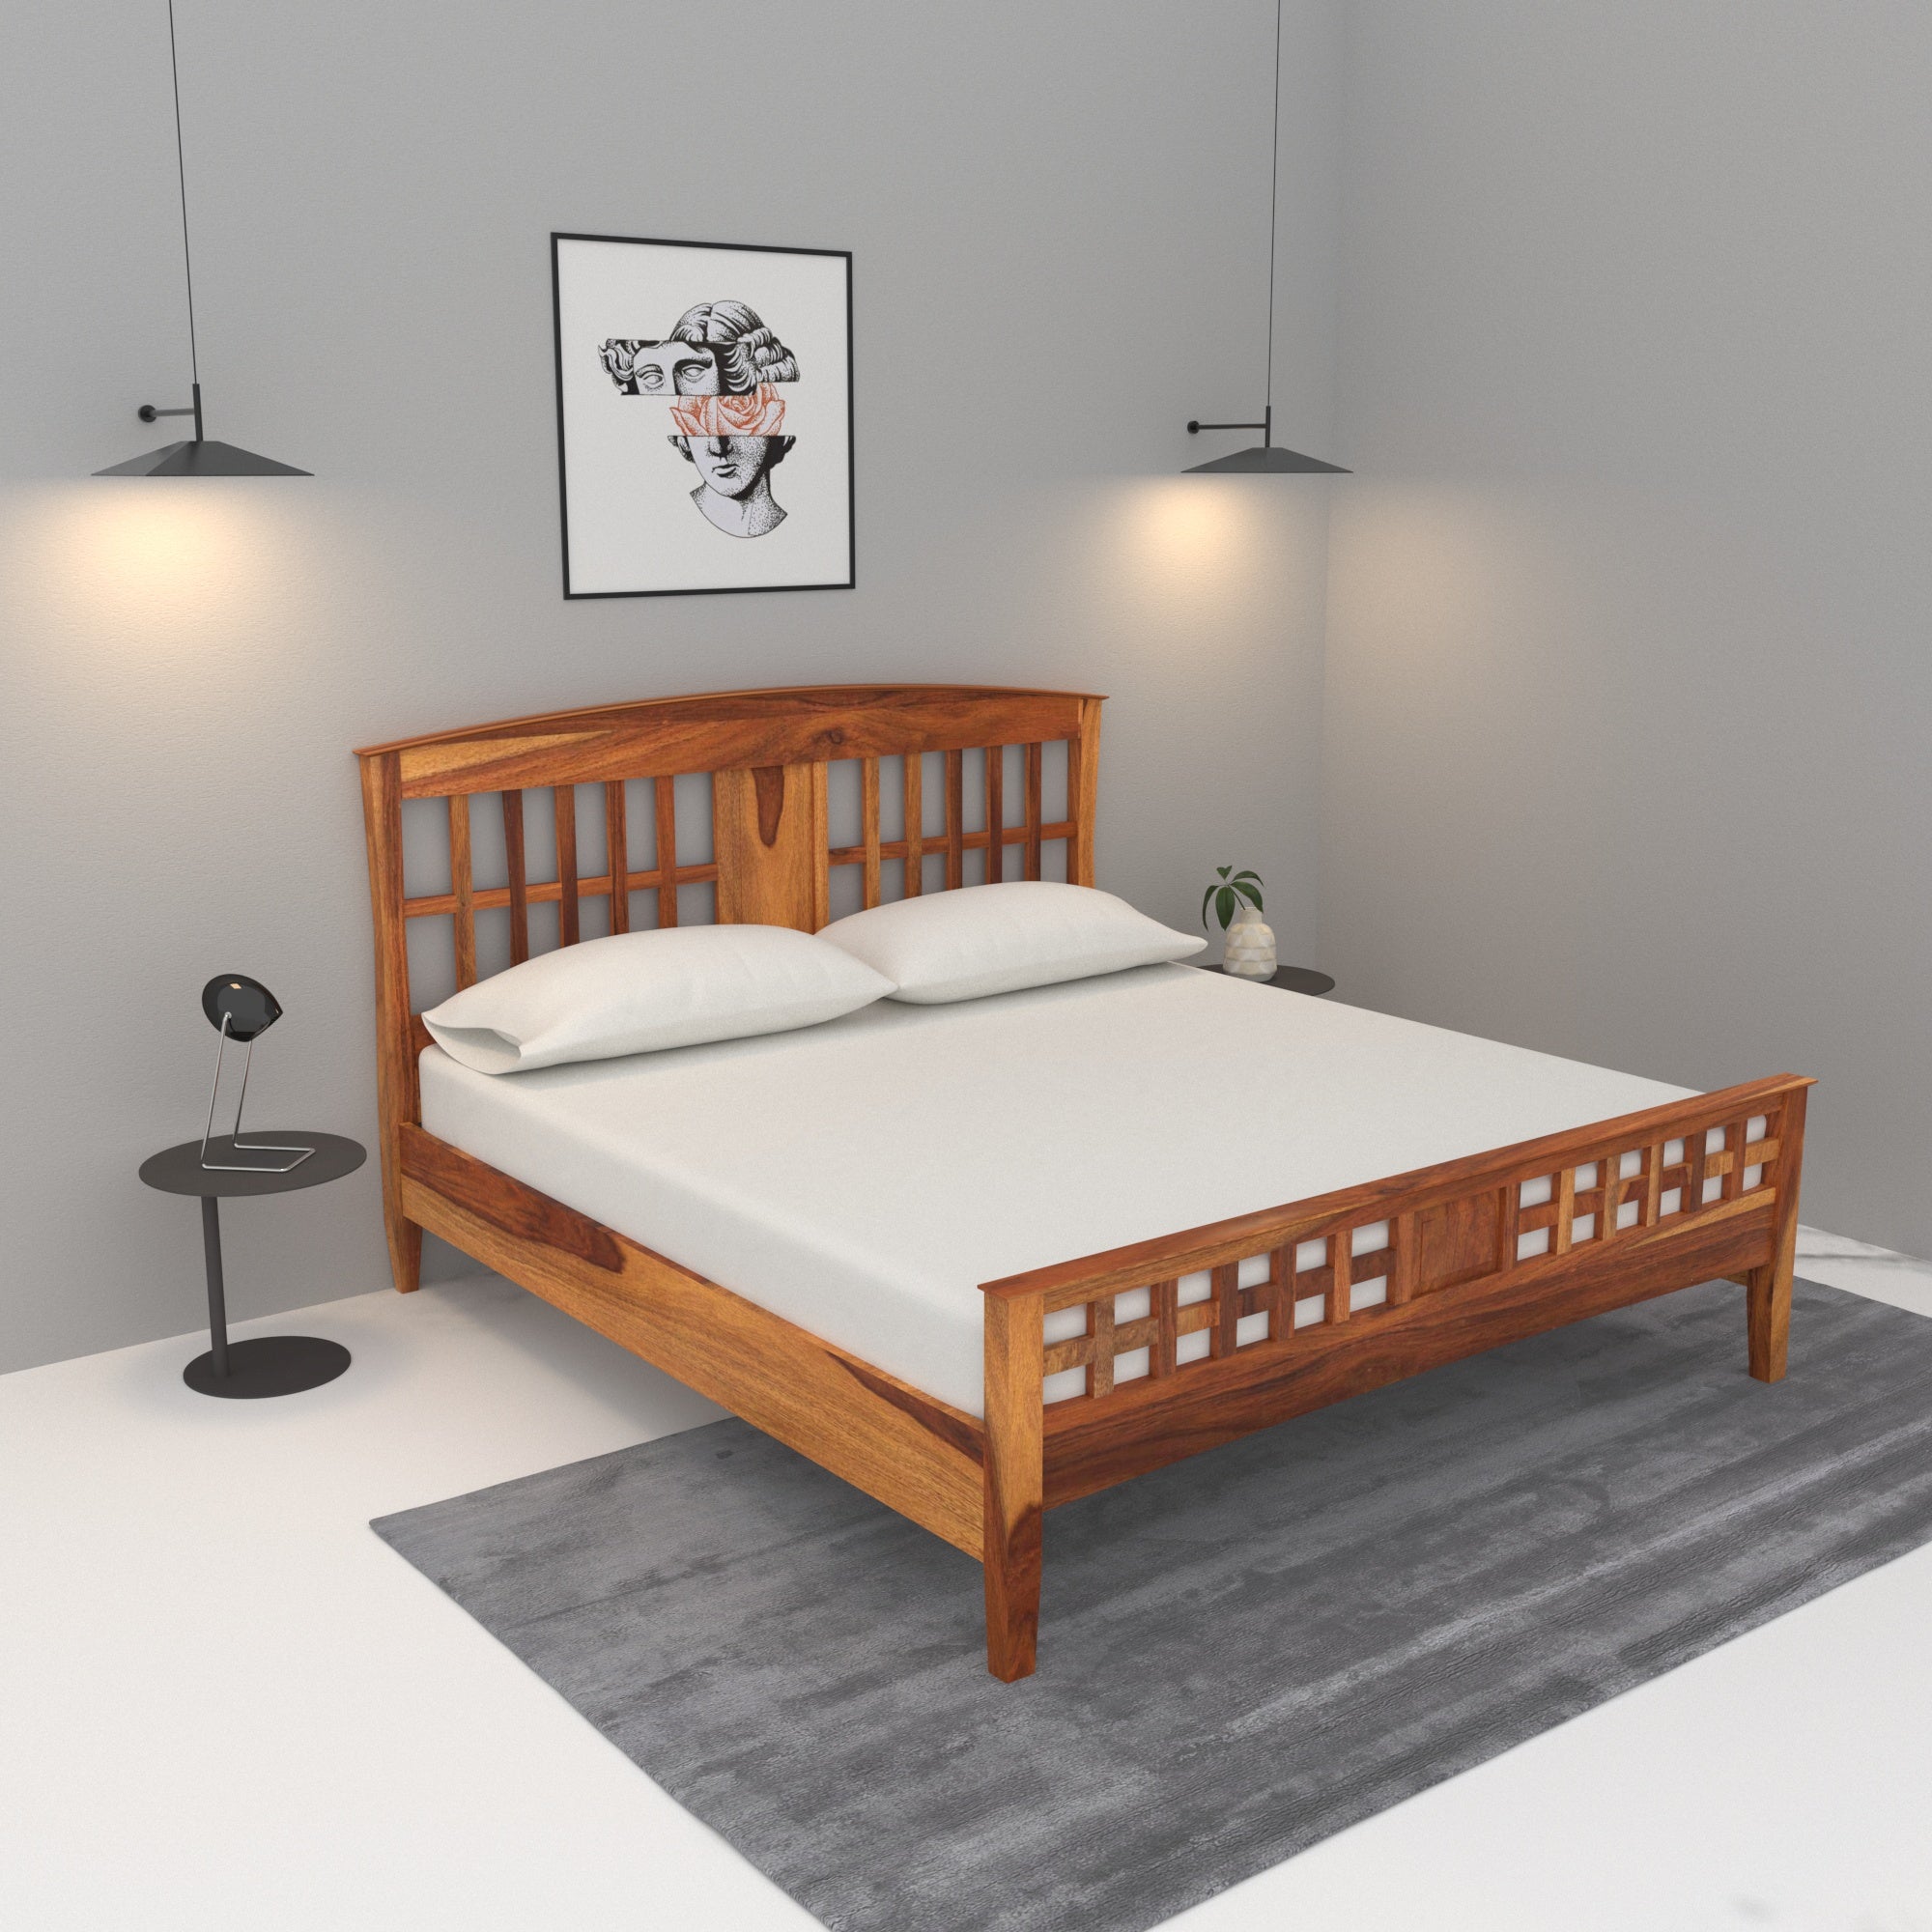 Rectangular Design Bed in Natural Light Brown Finish Bed